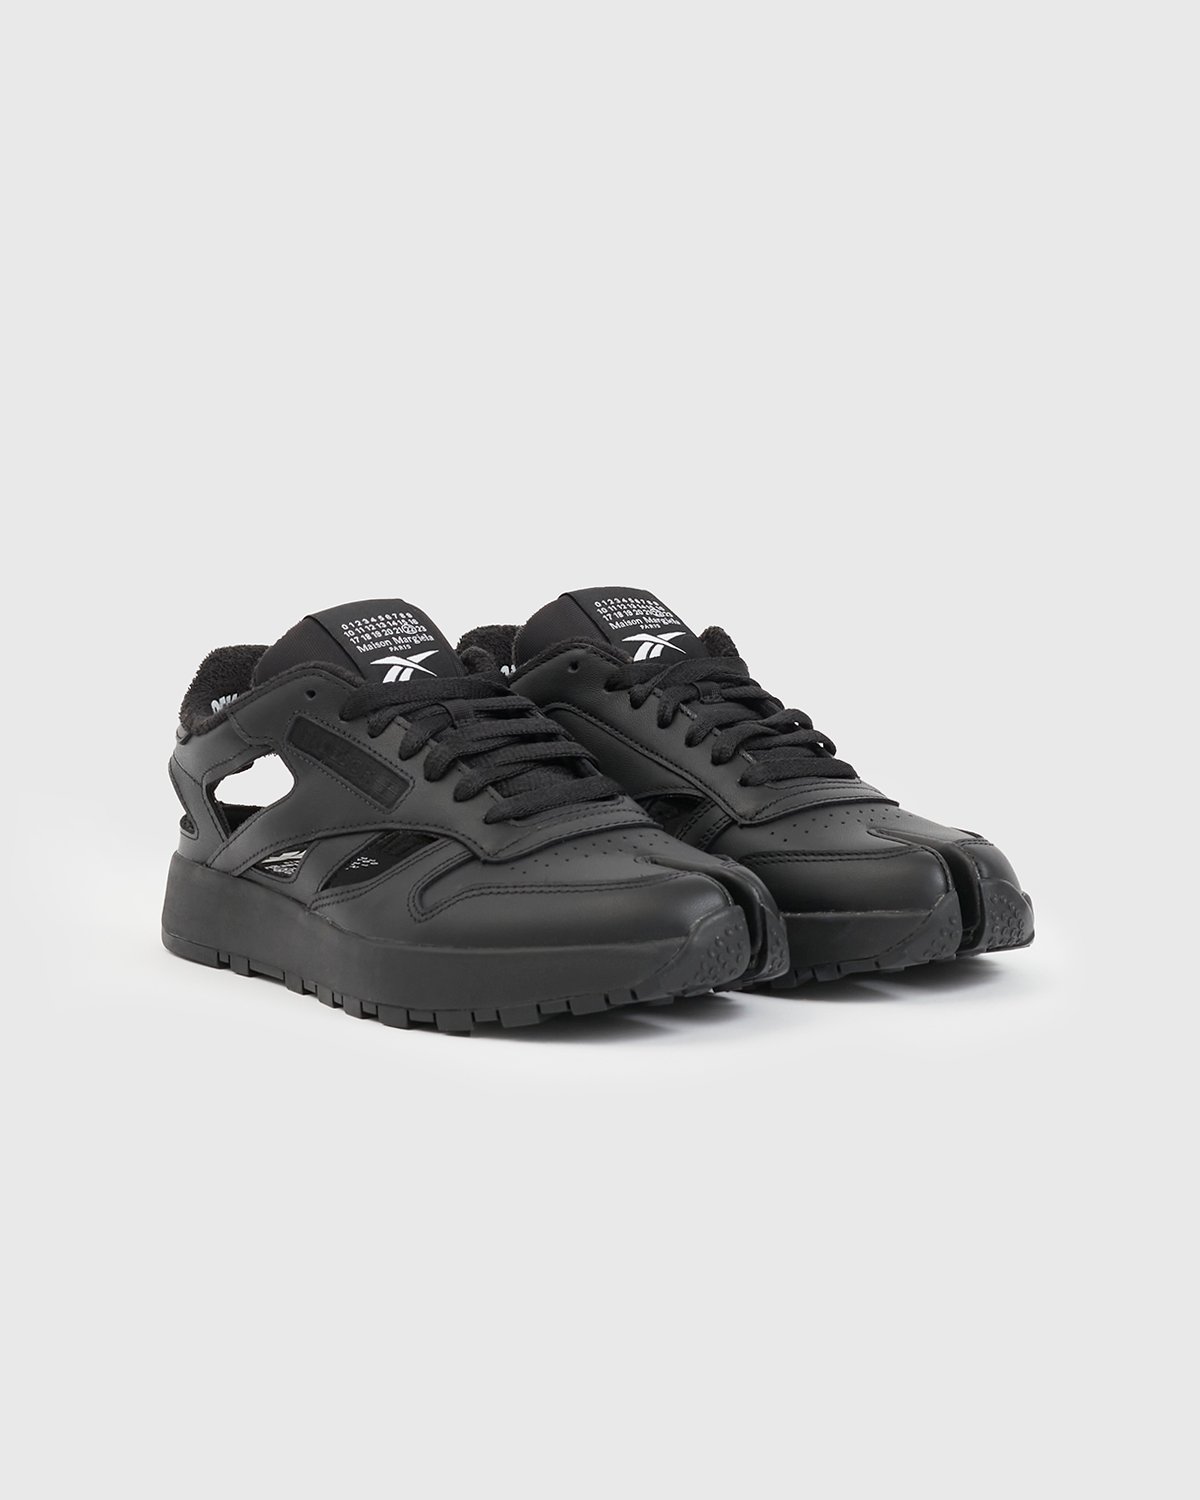 Maison Margiela x Reebok - Classic Leather Tabi Low Black - Footwear - Black - Image 2